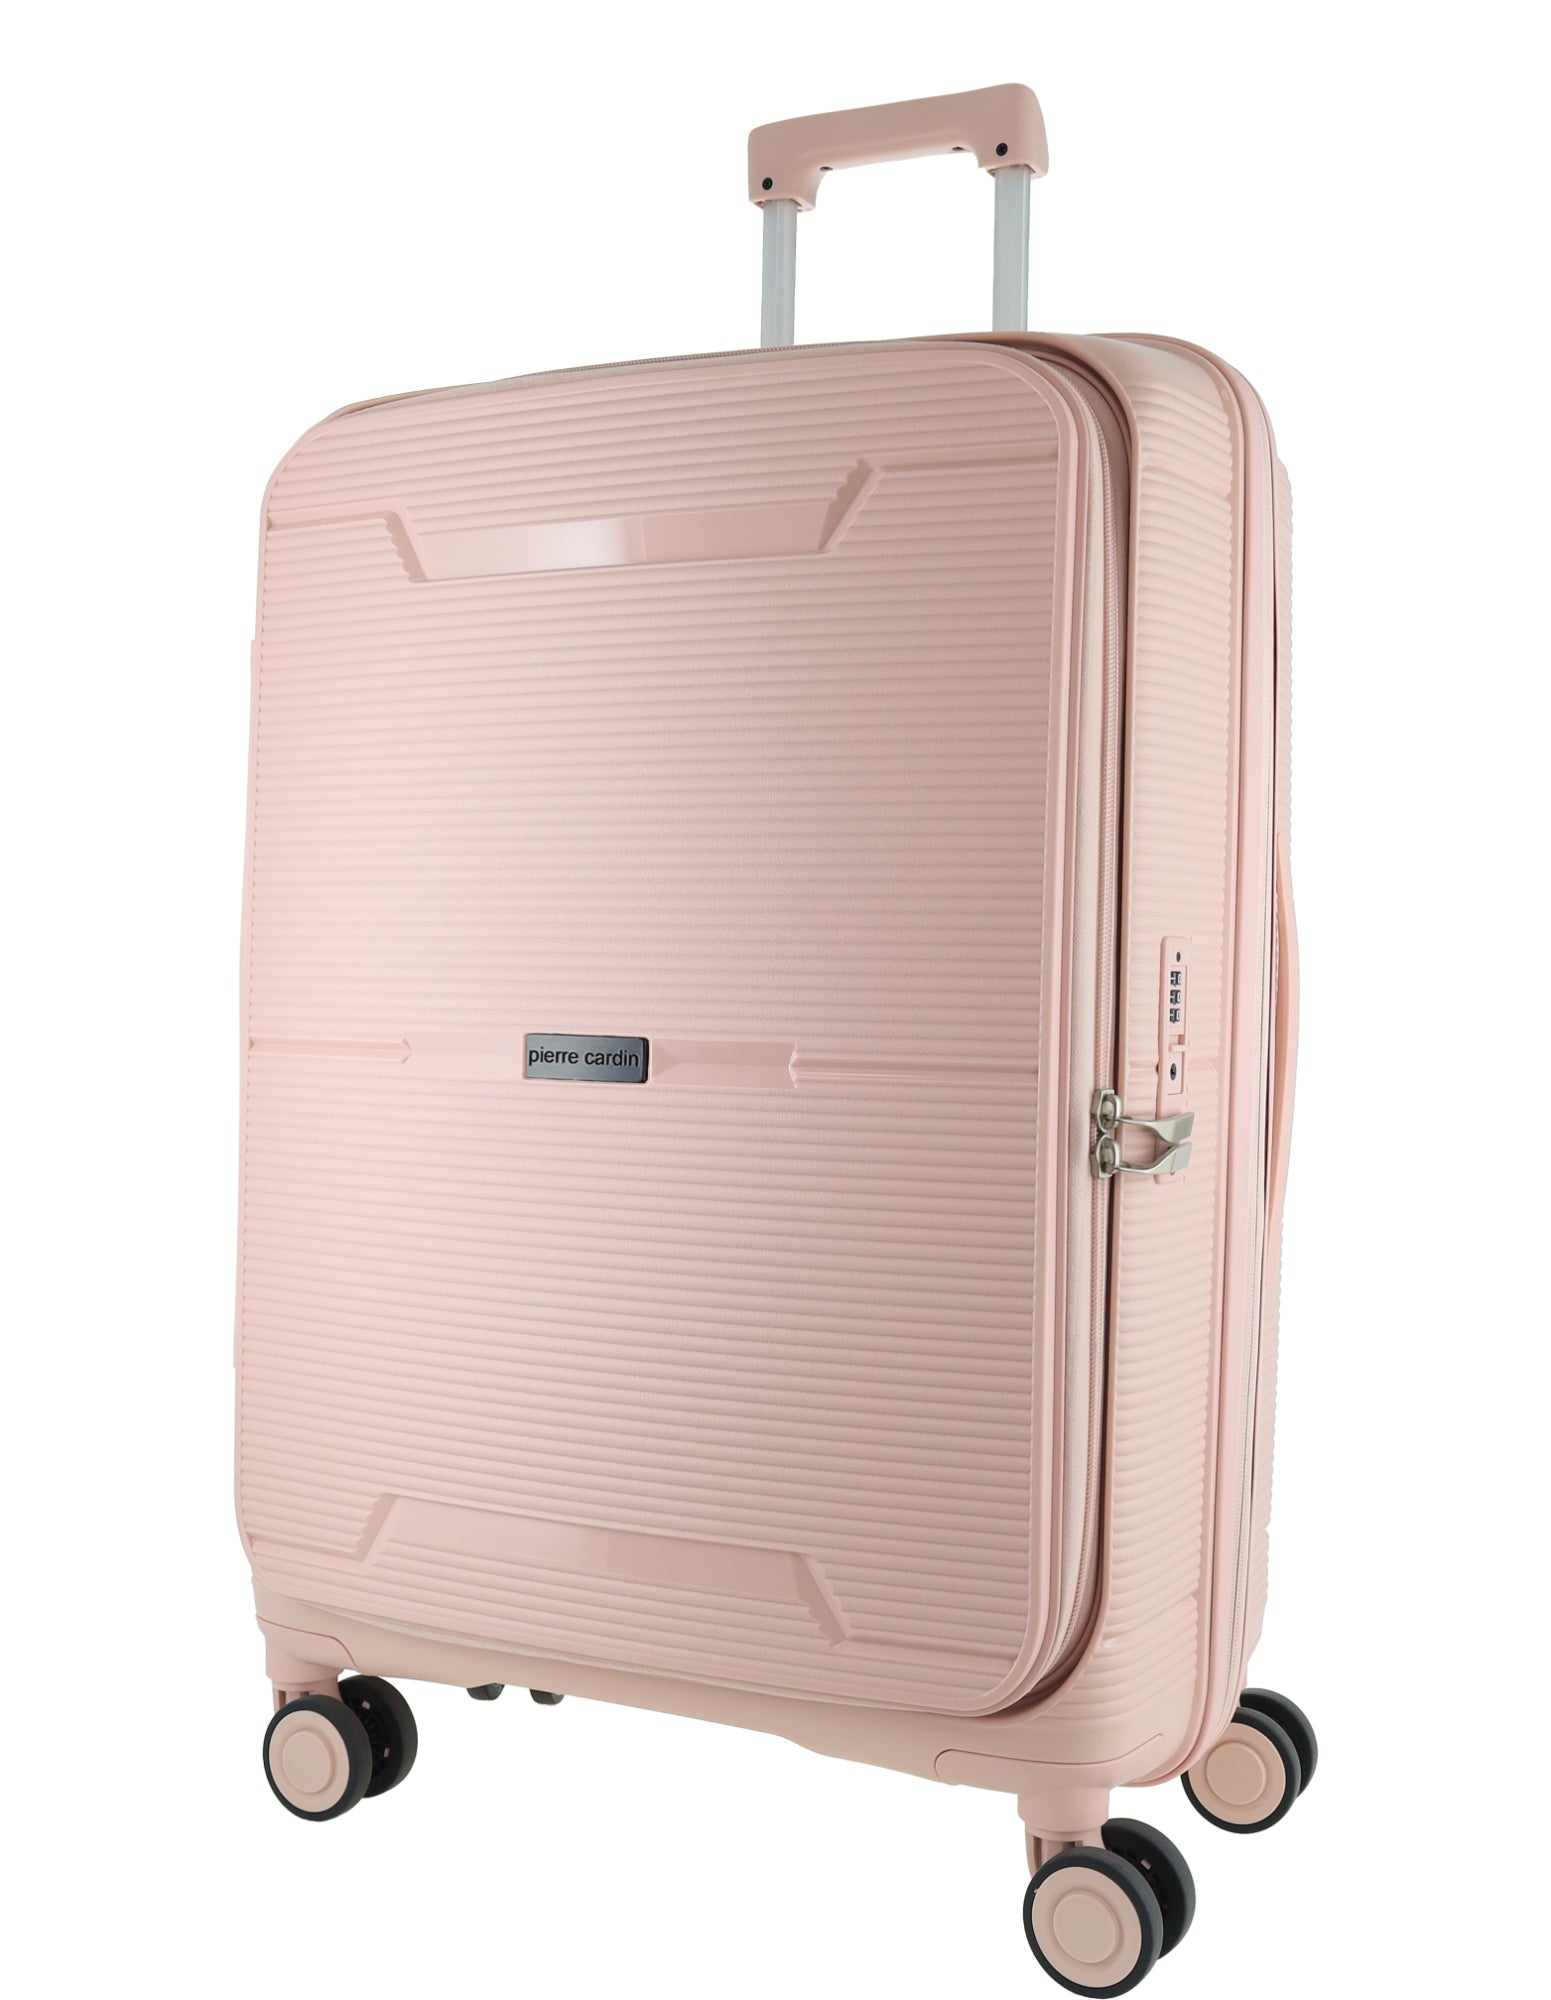 Pierre Cardin 69cm MEDIUM Hard Shell Suitcase in Blush